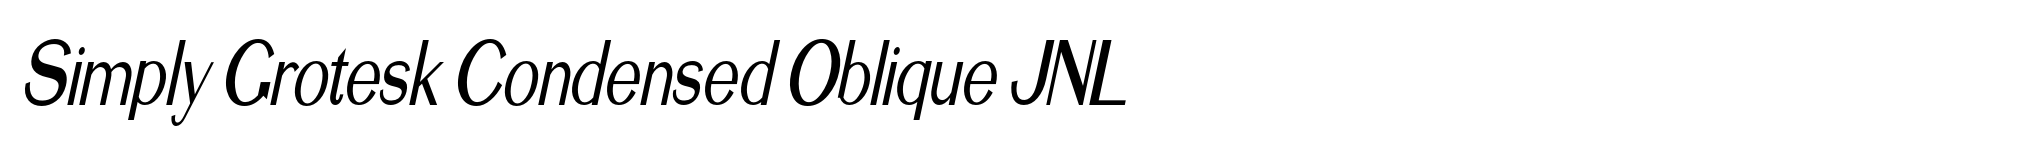 Simply Grotesk Condensed Oblique JNL image